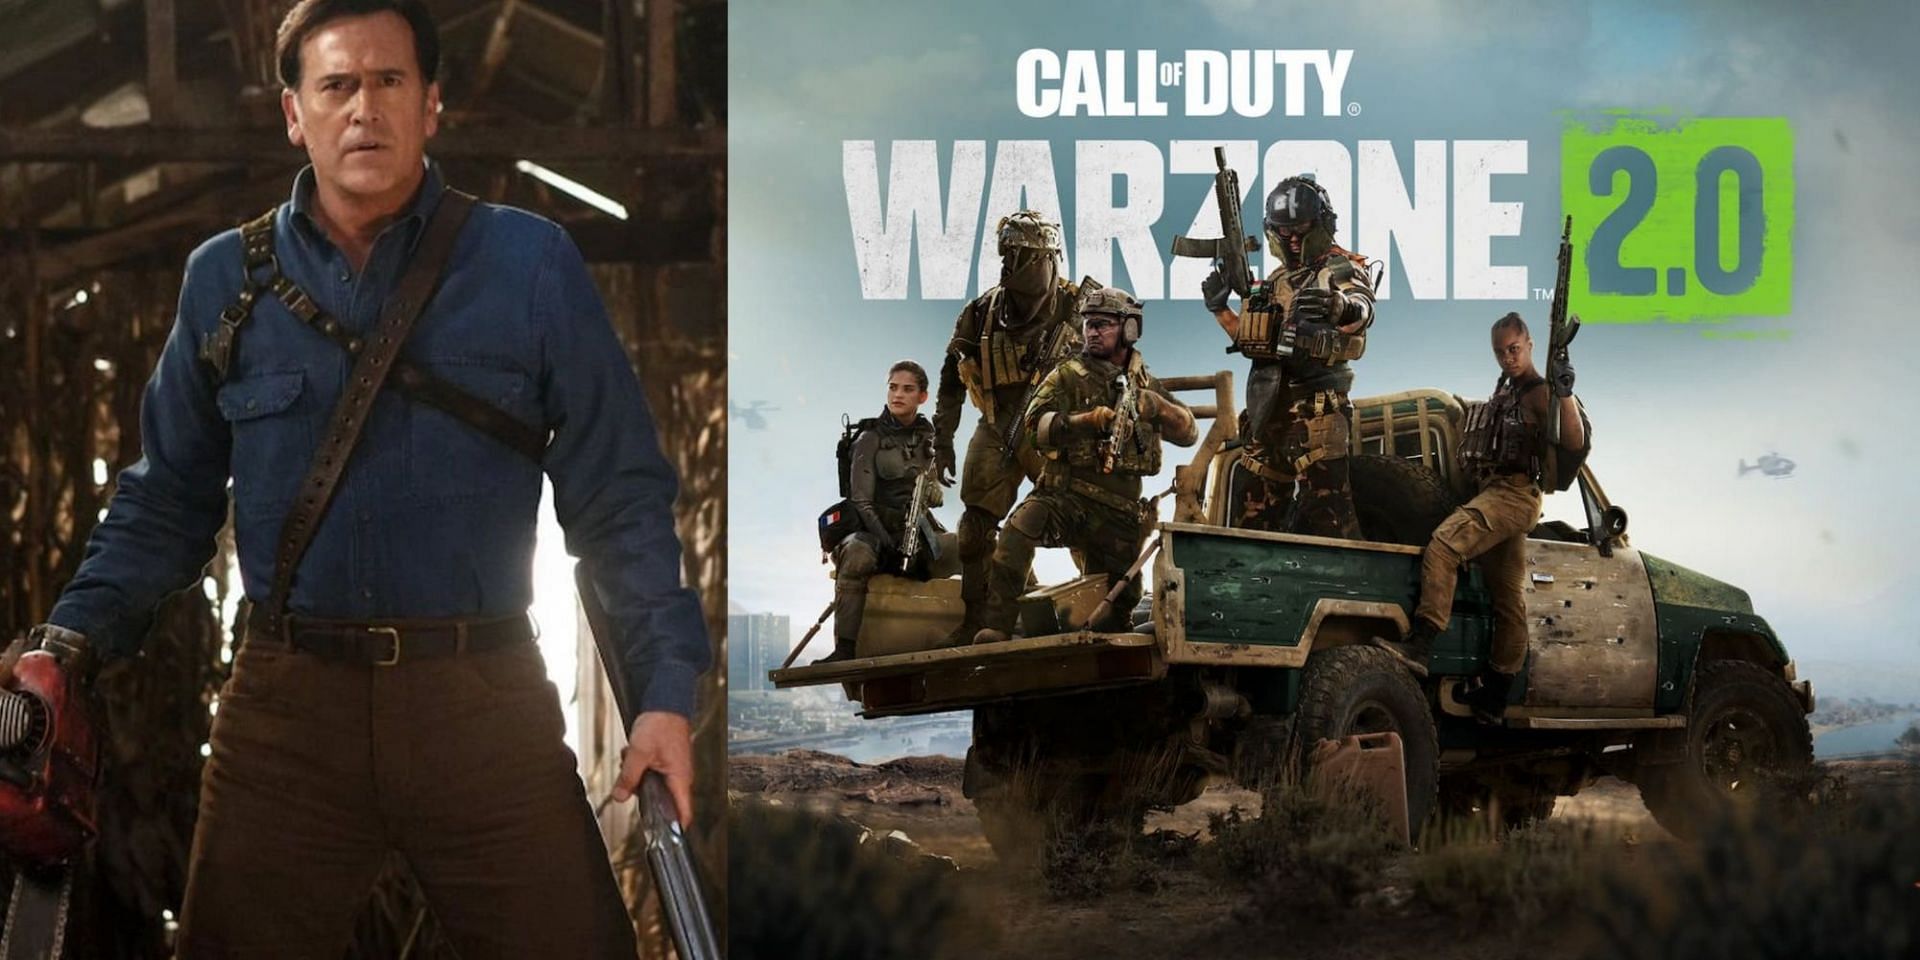 How to get popular Ash Williams operator in Modern Warfare 2